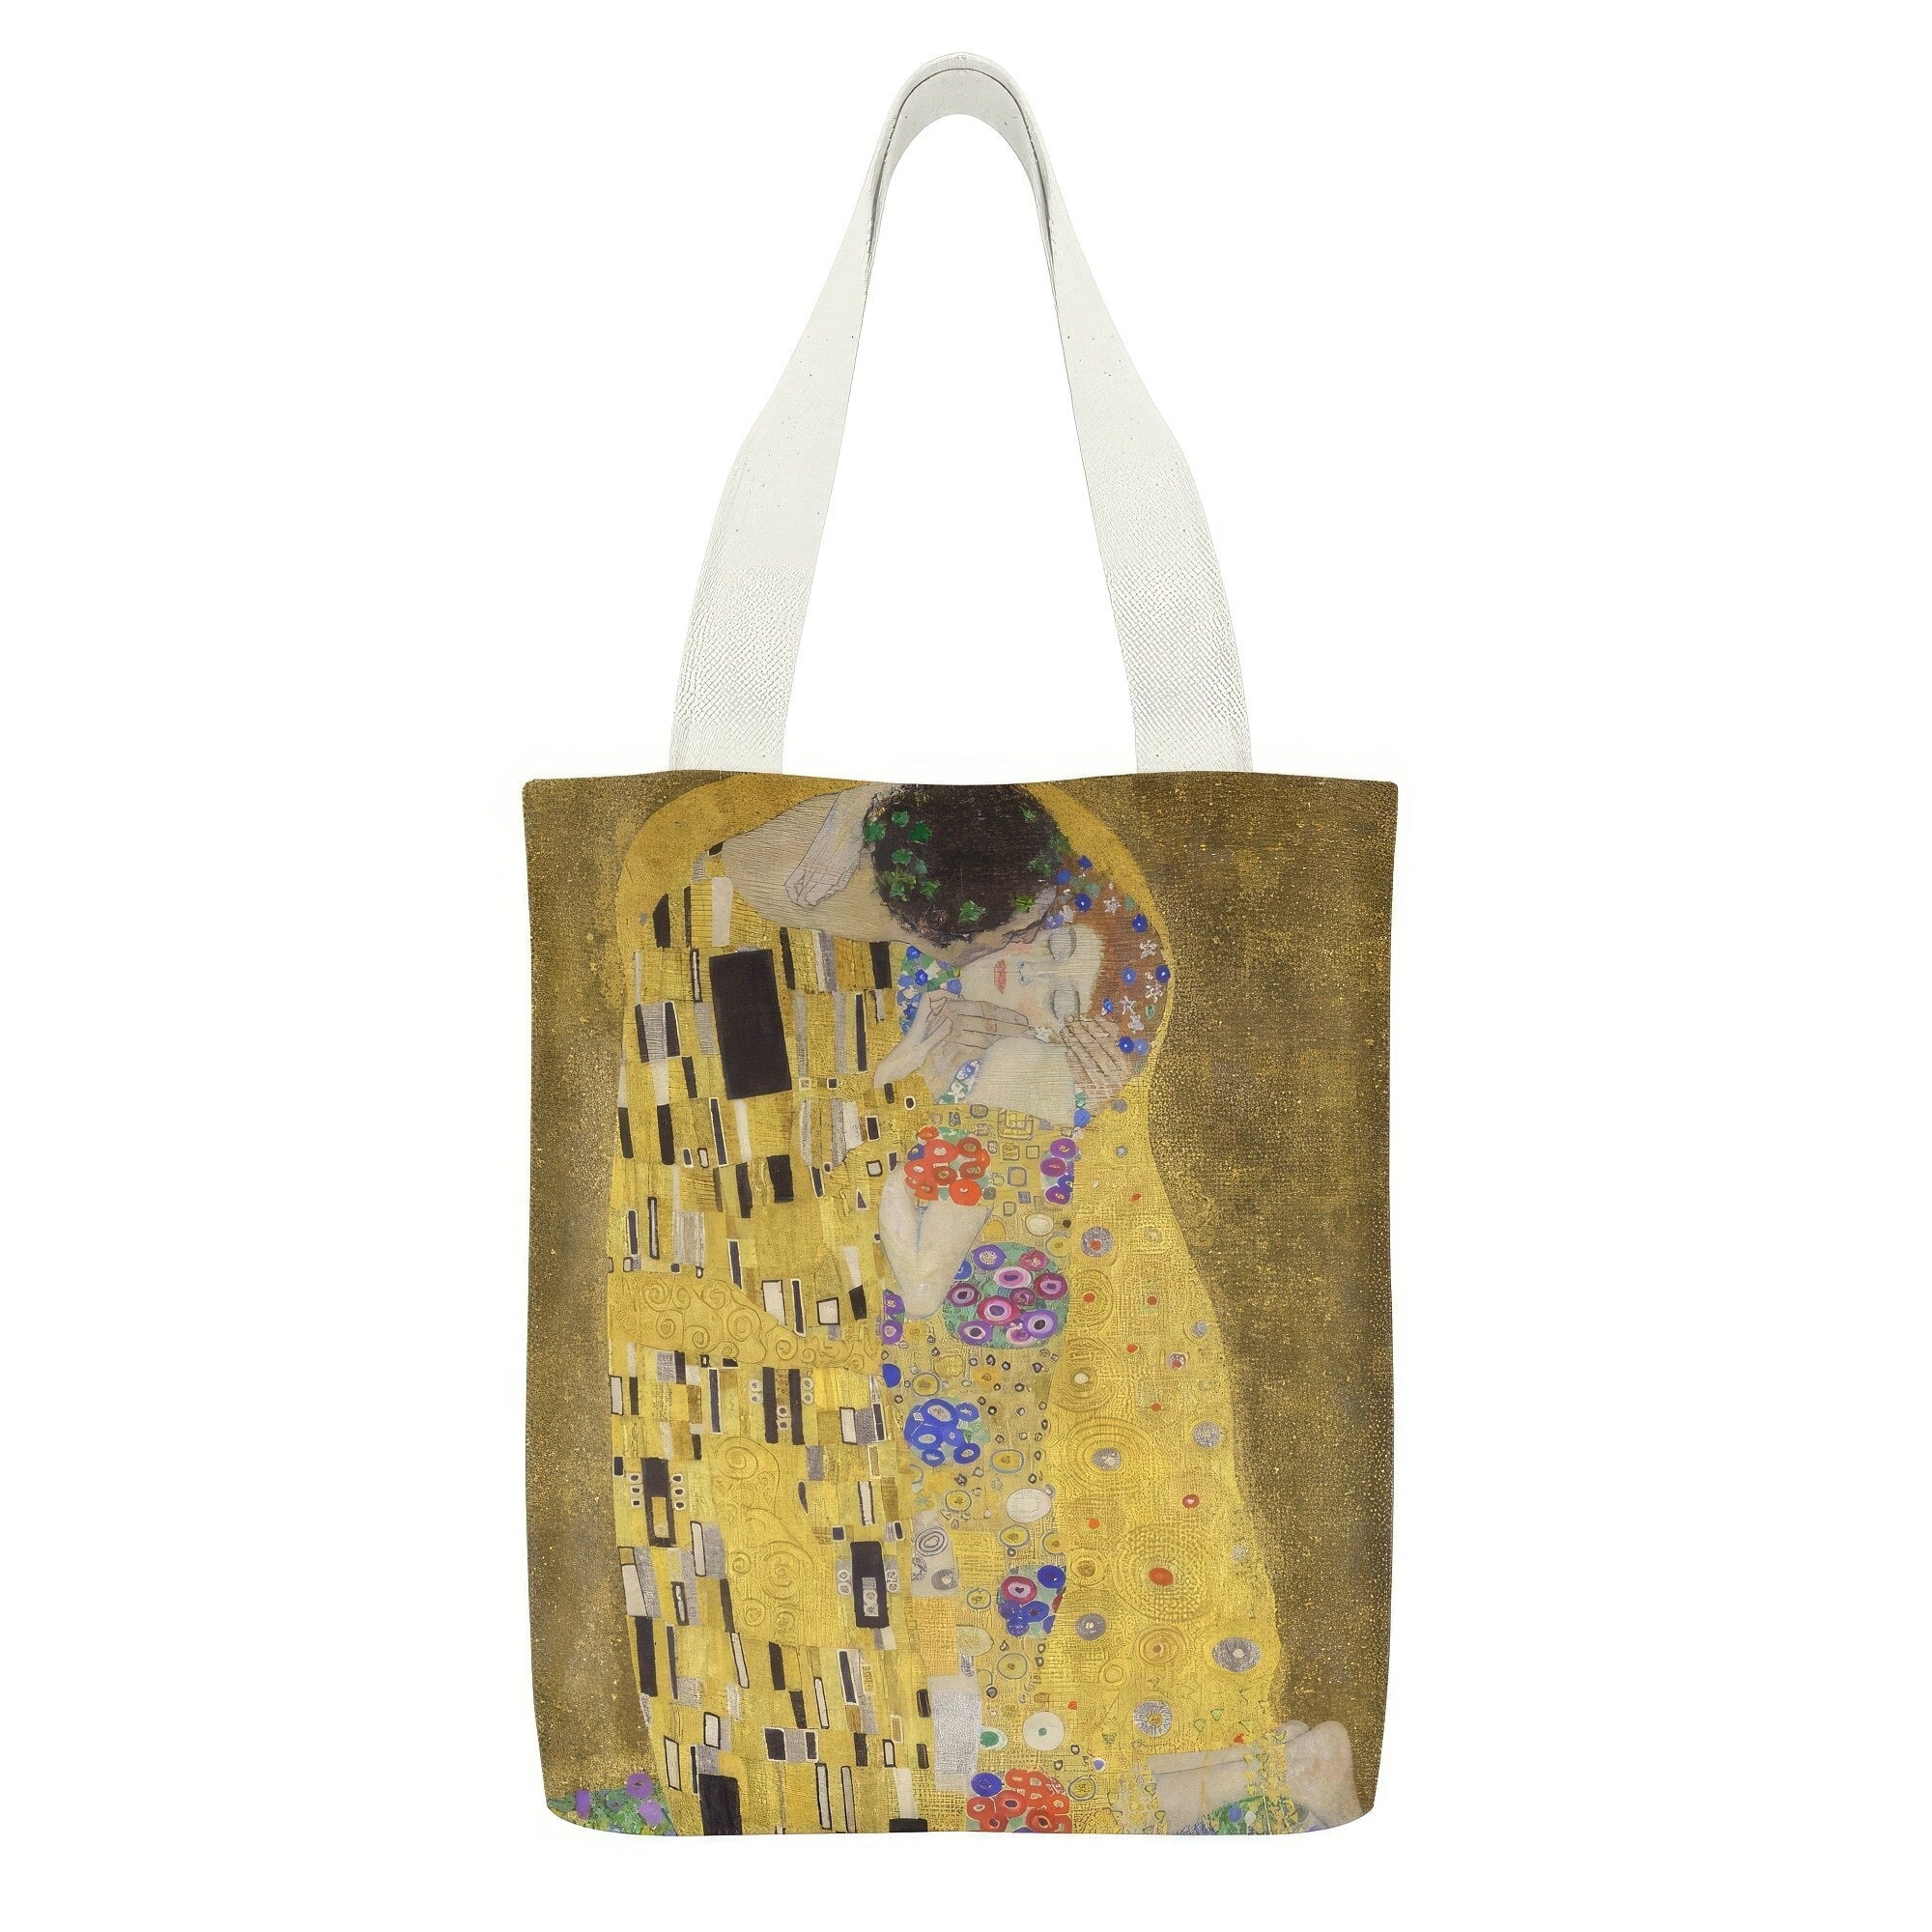 Gustav Klimt's Vibrant Life and Death Scene Tote Bag - A Timeless